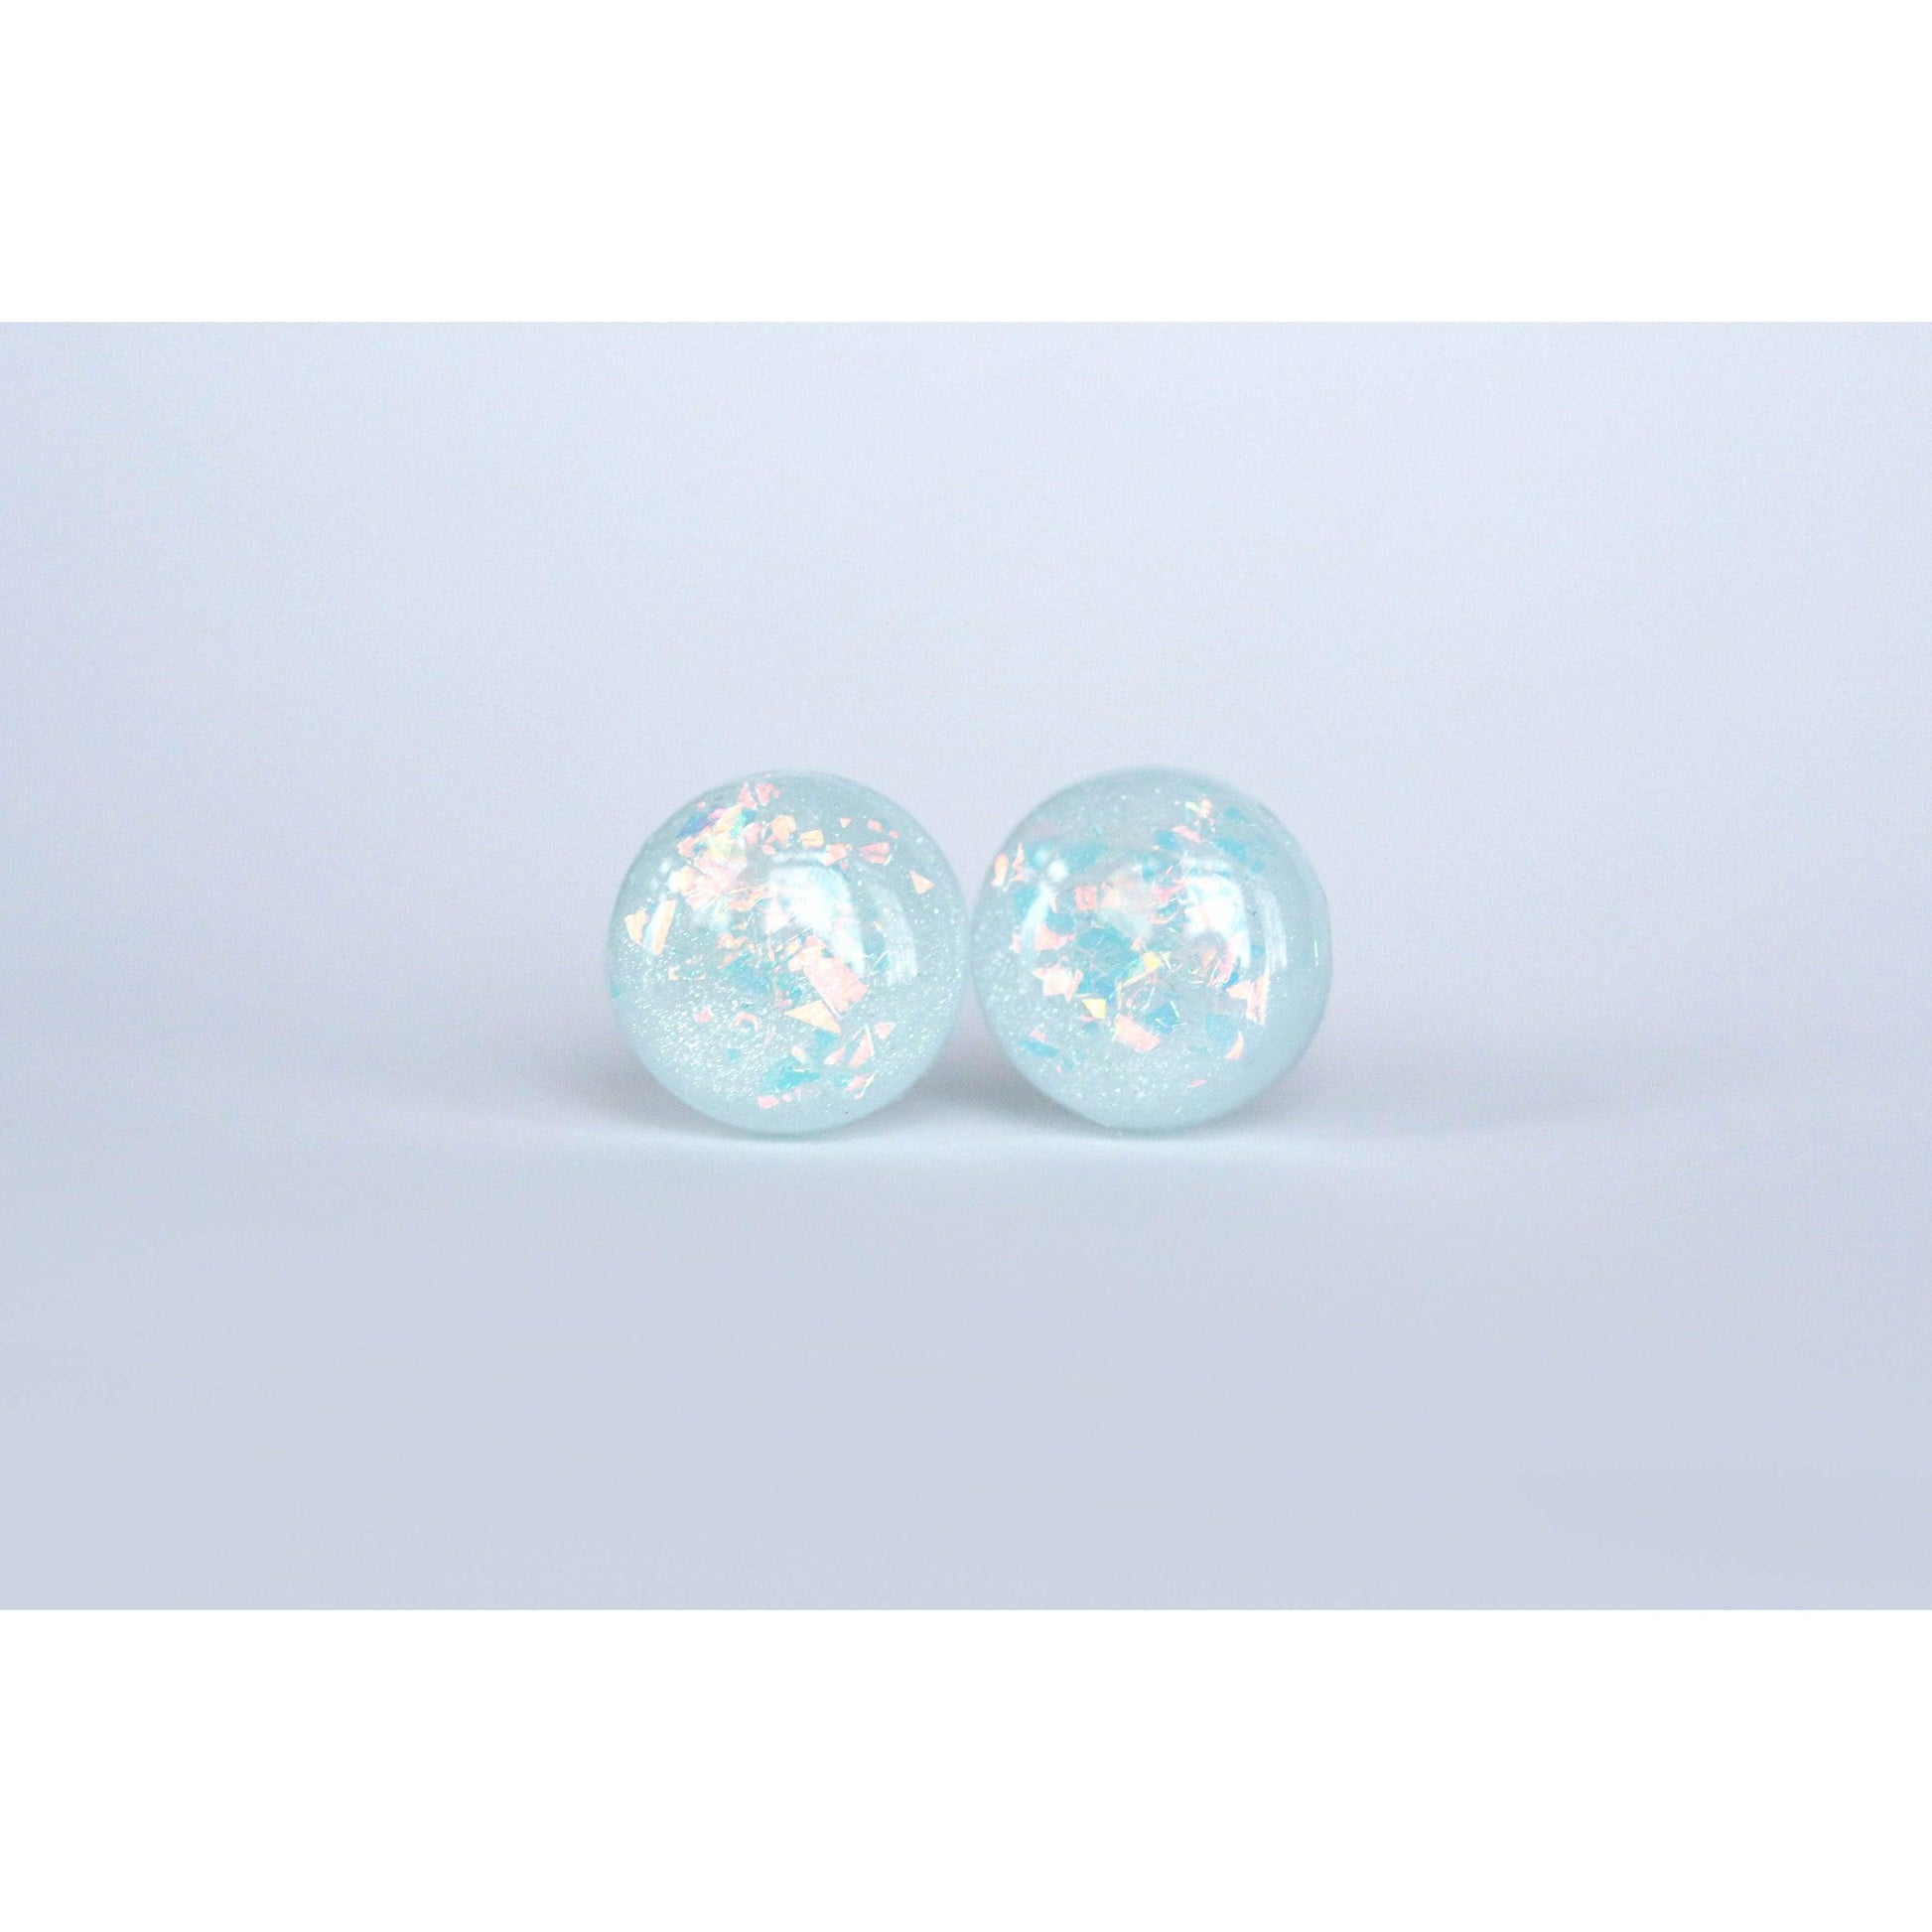 Sky blue sparkly earrings freeshipping - Ollijewelry